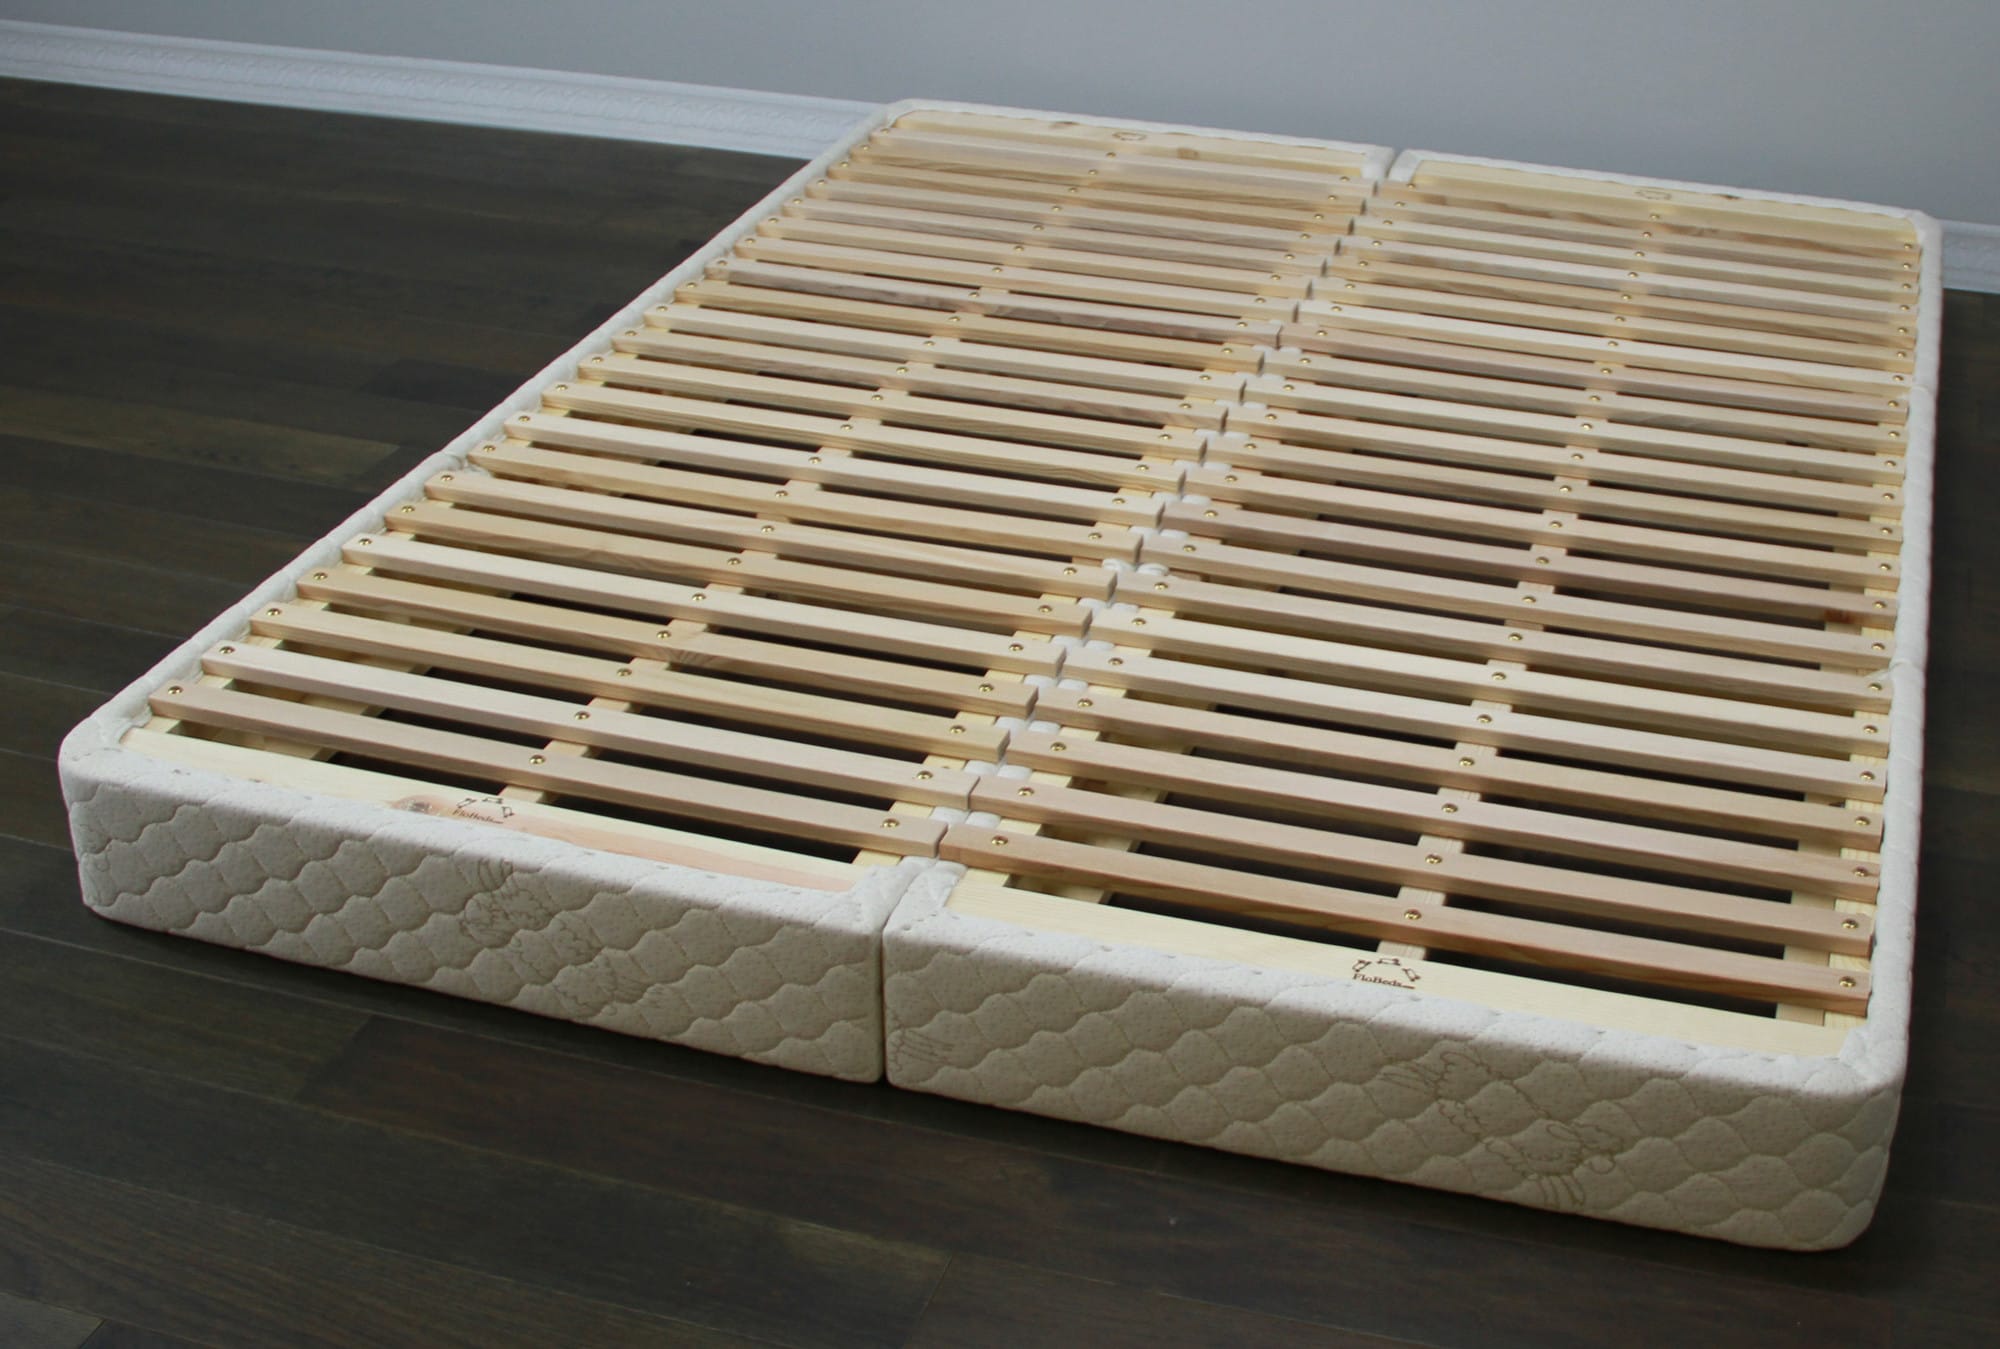 wood slat foundation for latex mattress